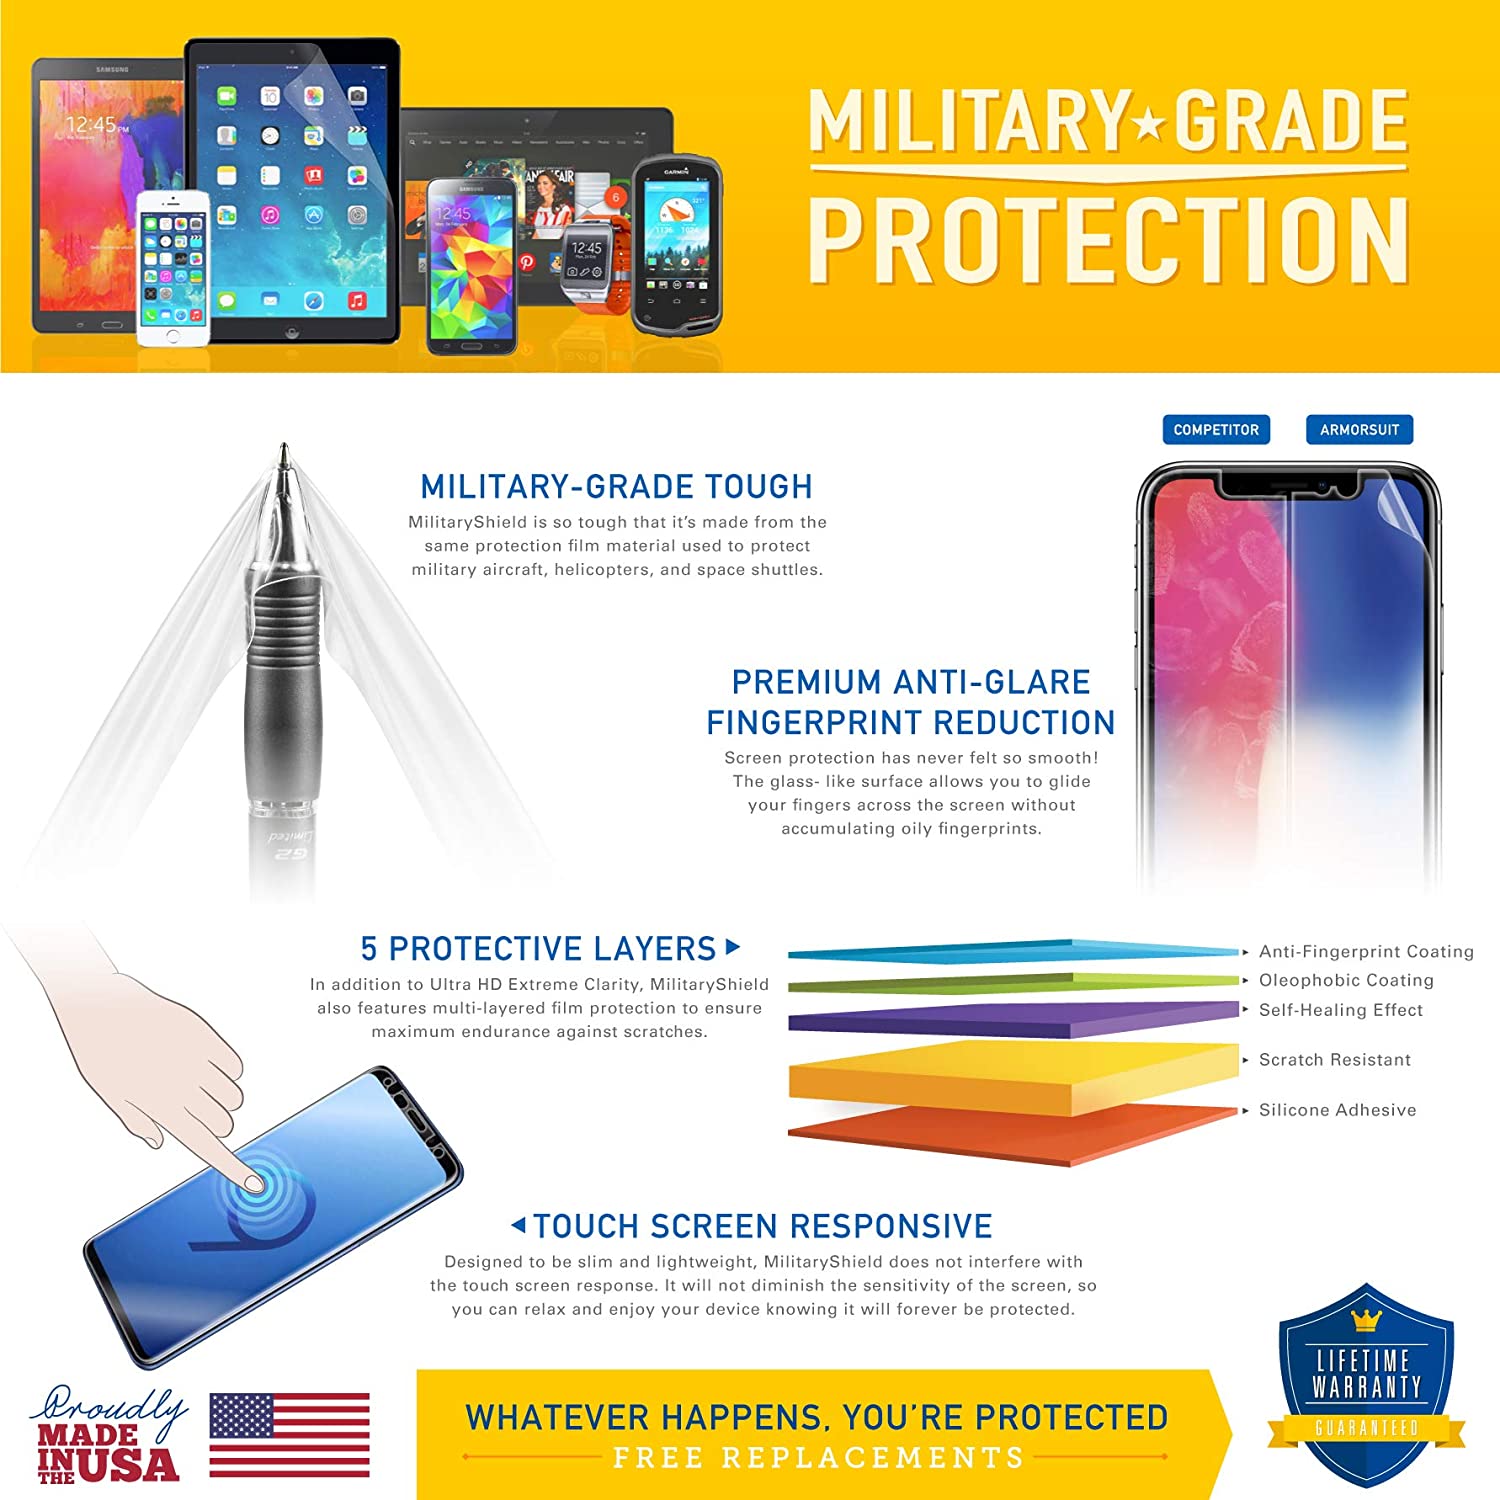 T-Mobile Prism Screen Protector + White Carbon Fiber Skin Protector